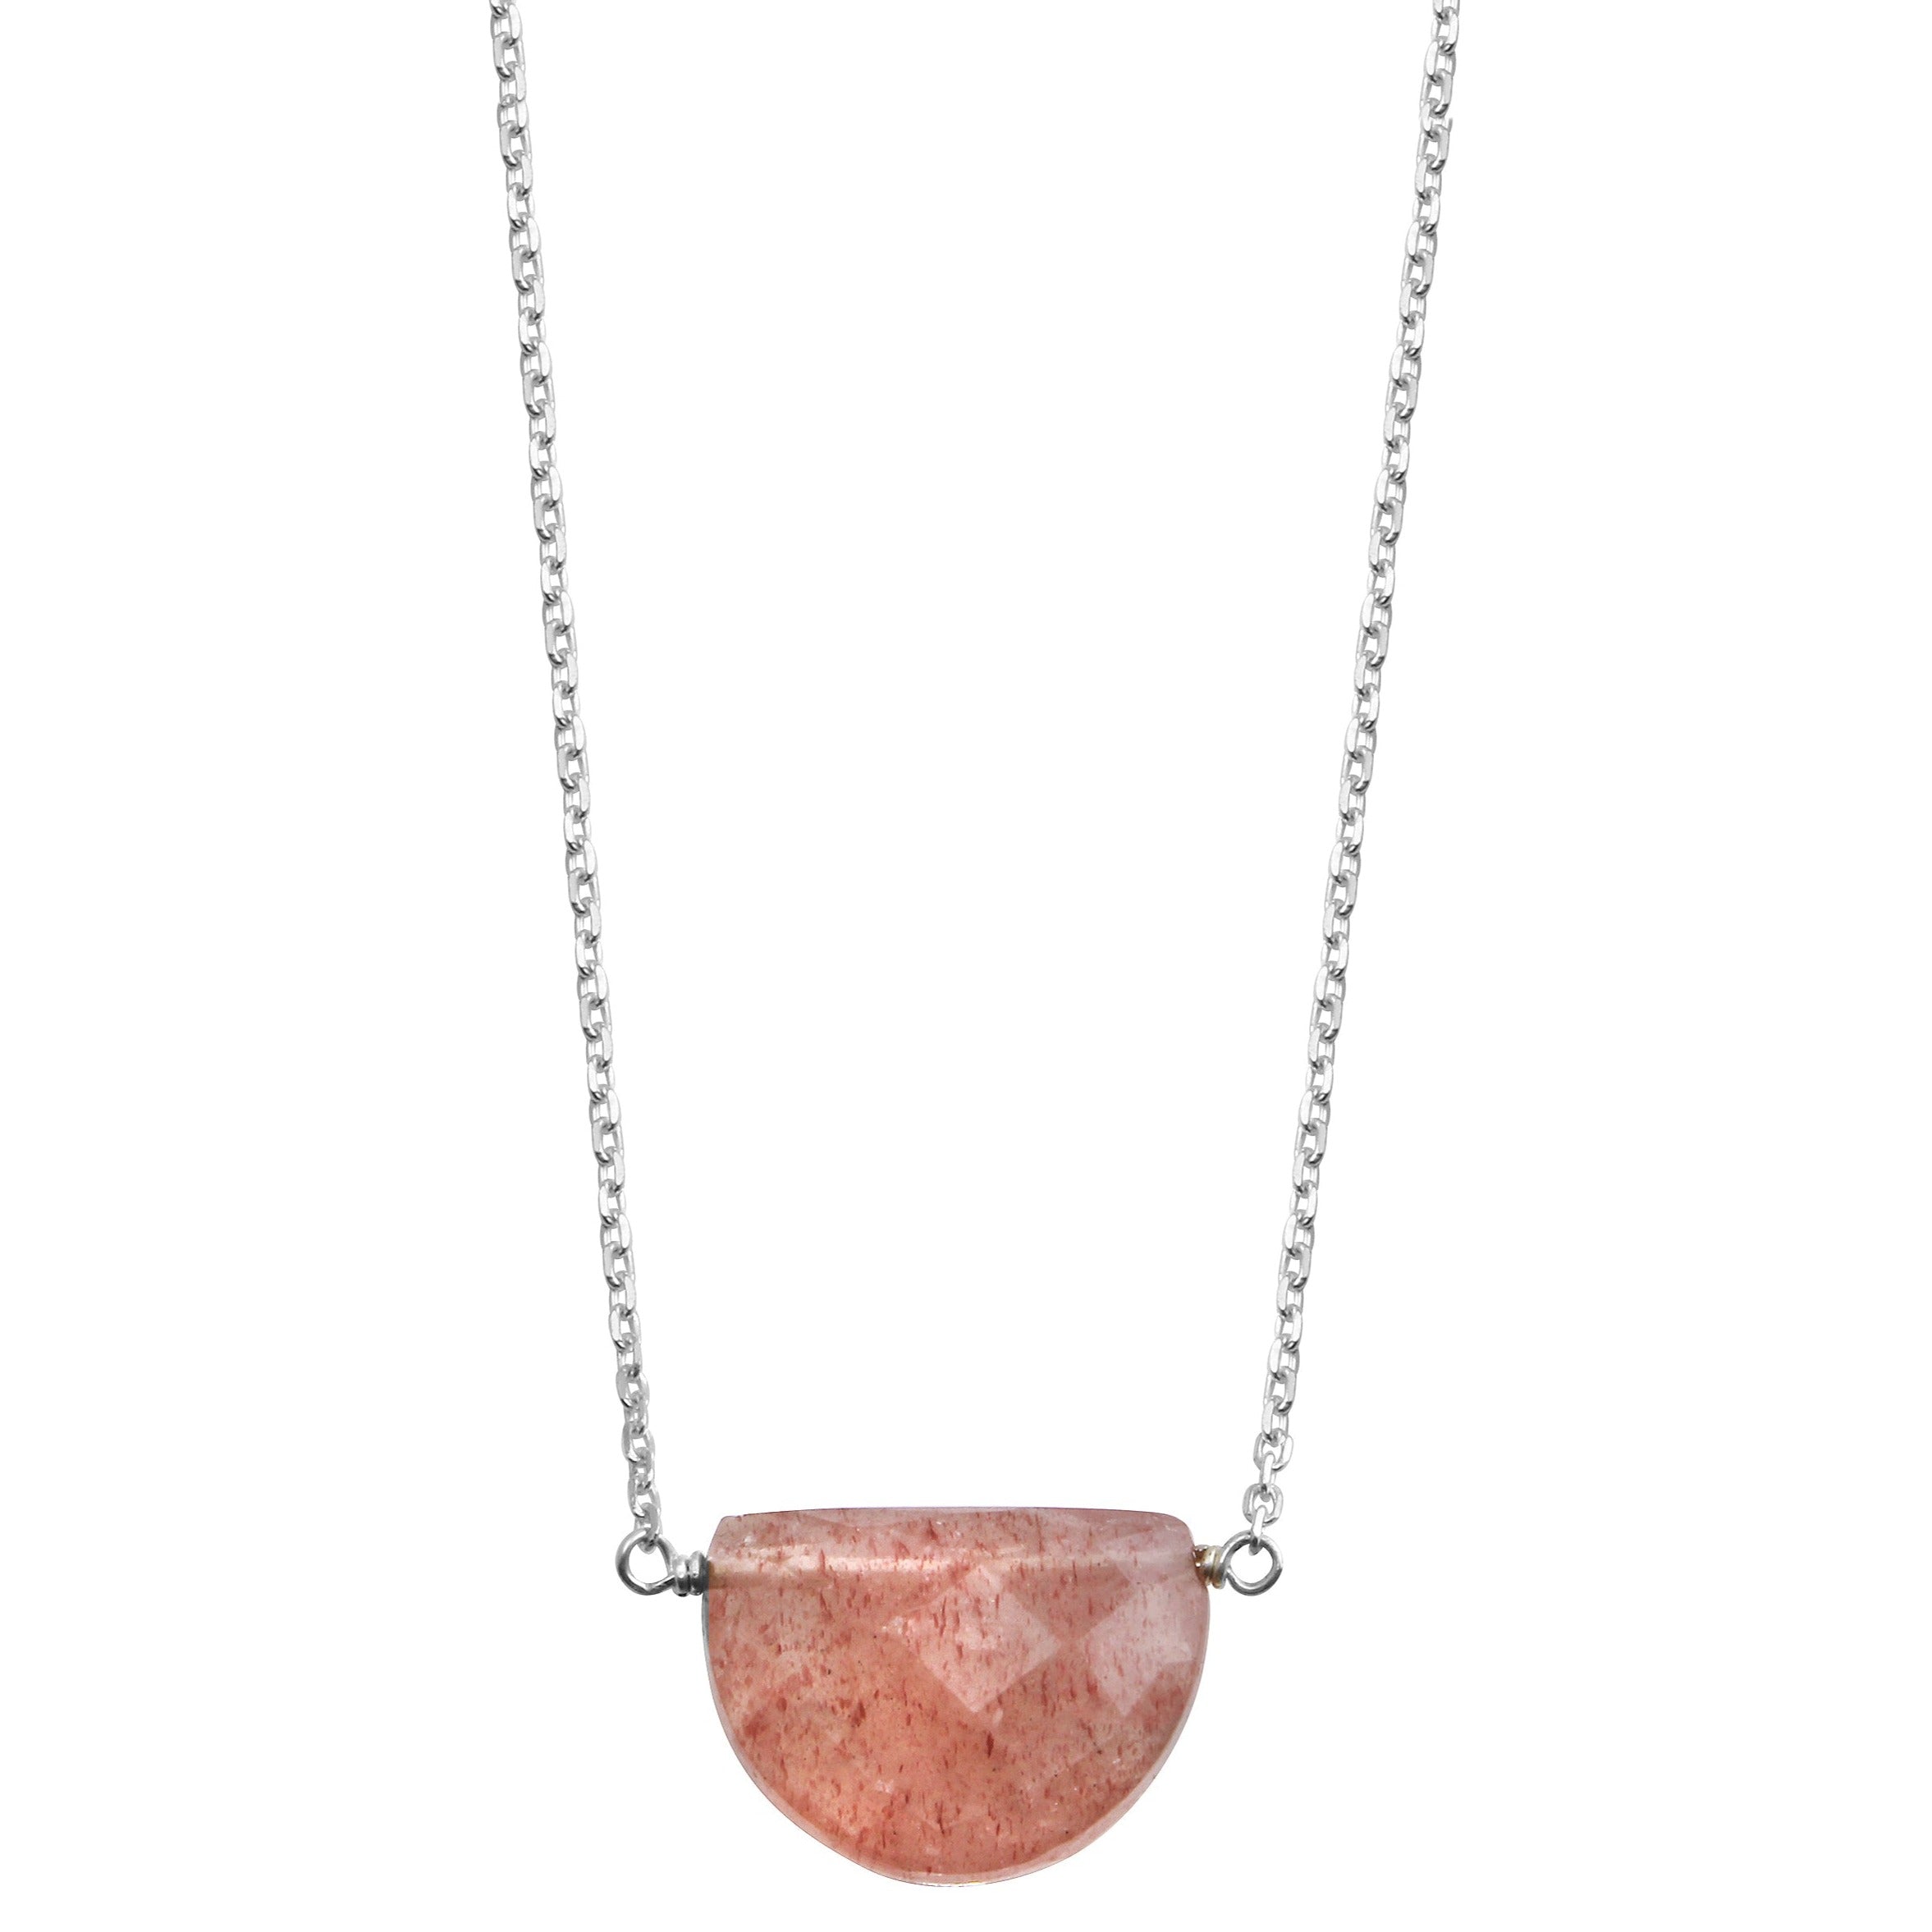 Strawberry Quartz half moon sterling silver necklace | Little Rock Collection necklace Amanda K Lockrow